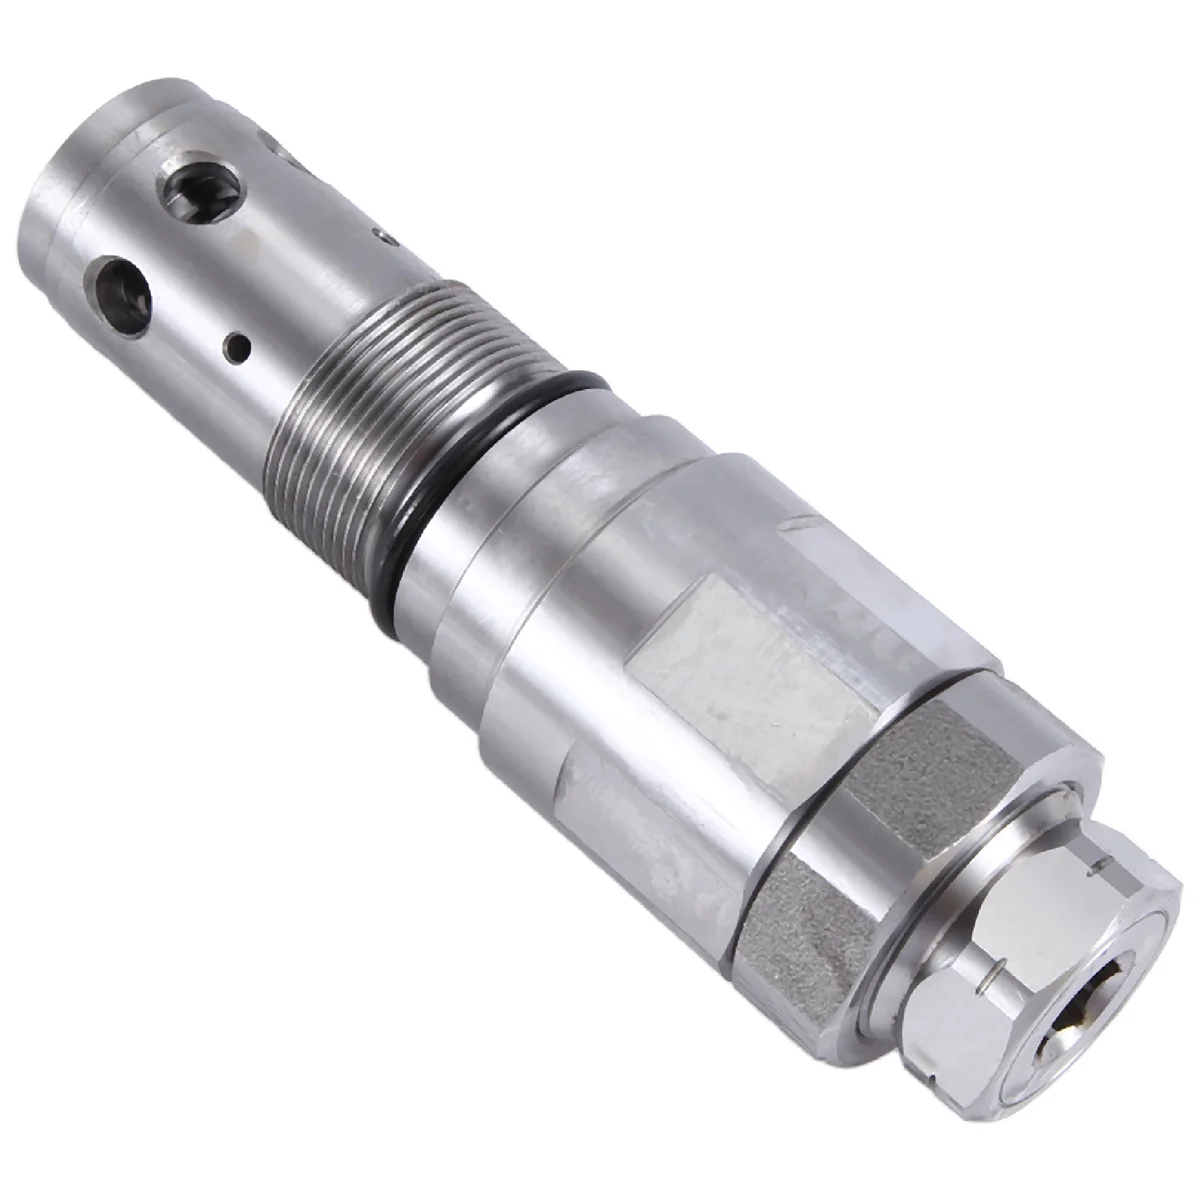 Гидравлический предохранительный клапан для экскаватора Kobelco EX200-5 ZAX200 ZAX240-3 SK200-6 SK200-6E DH200-5 4386065 YN22V00014F1 - 4